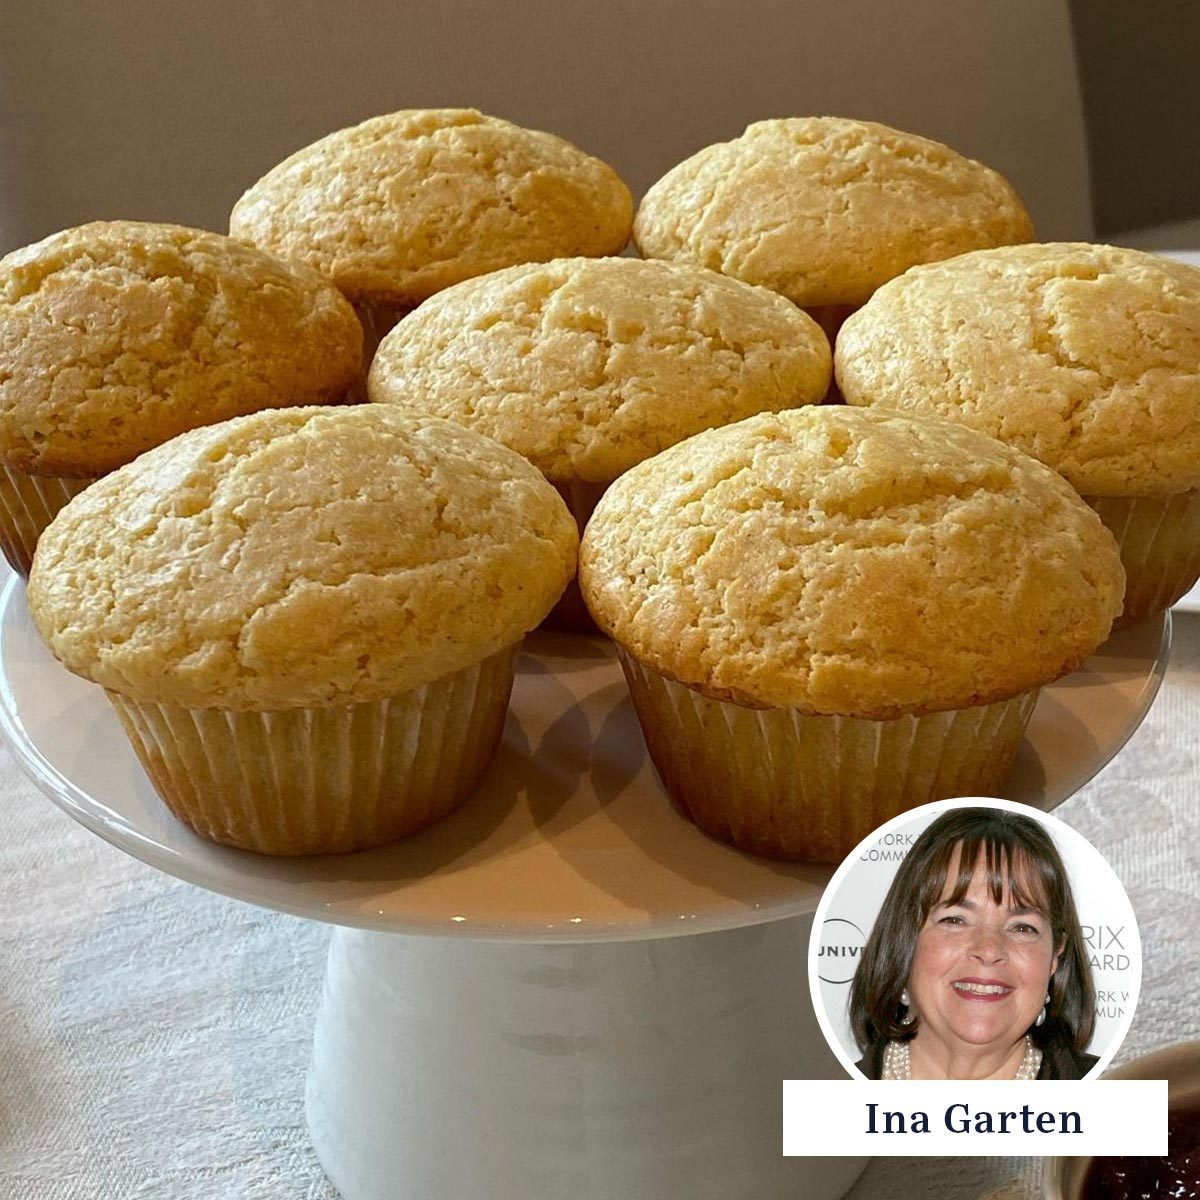 How to Make Corn Muffins Like Ina Garten | Taste of Home